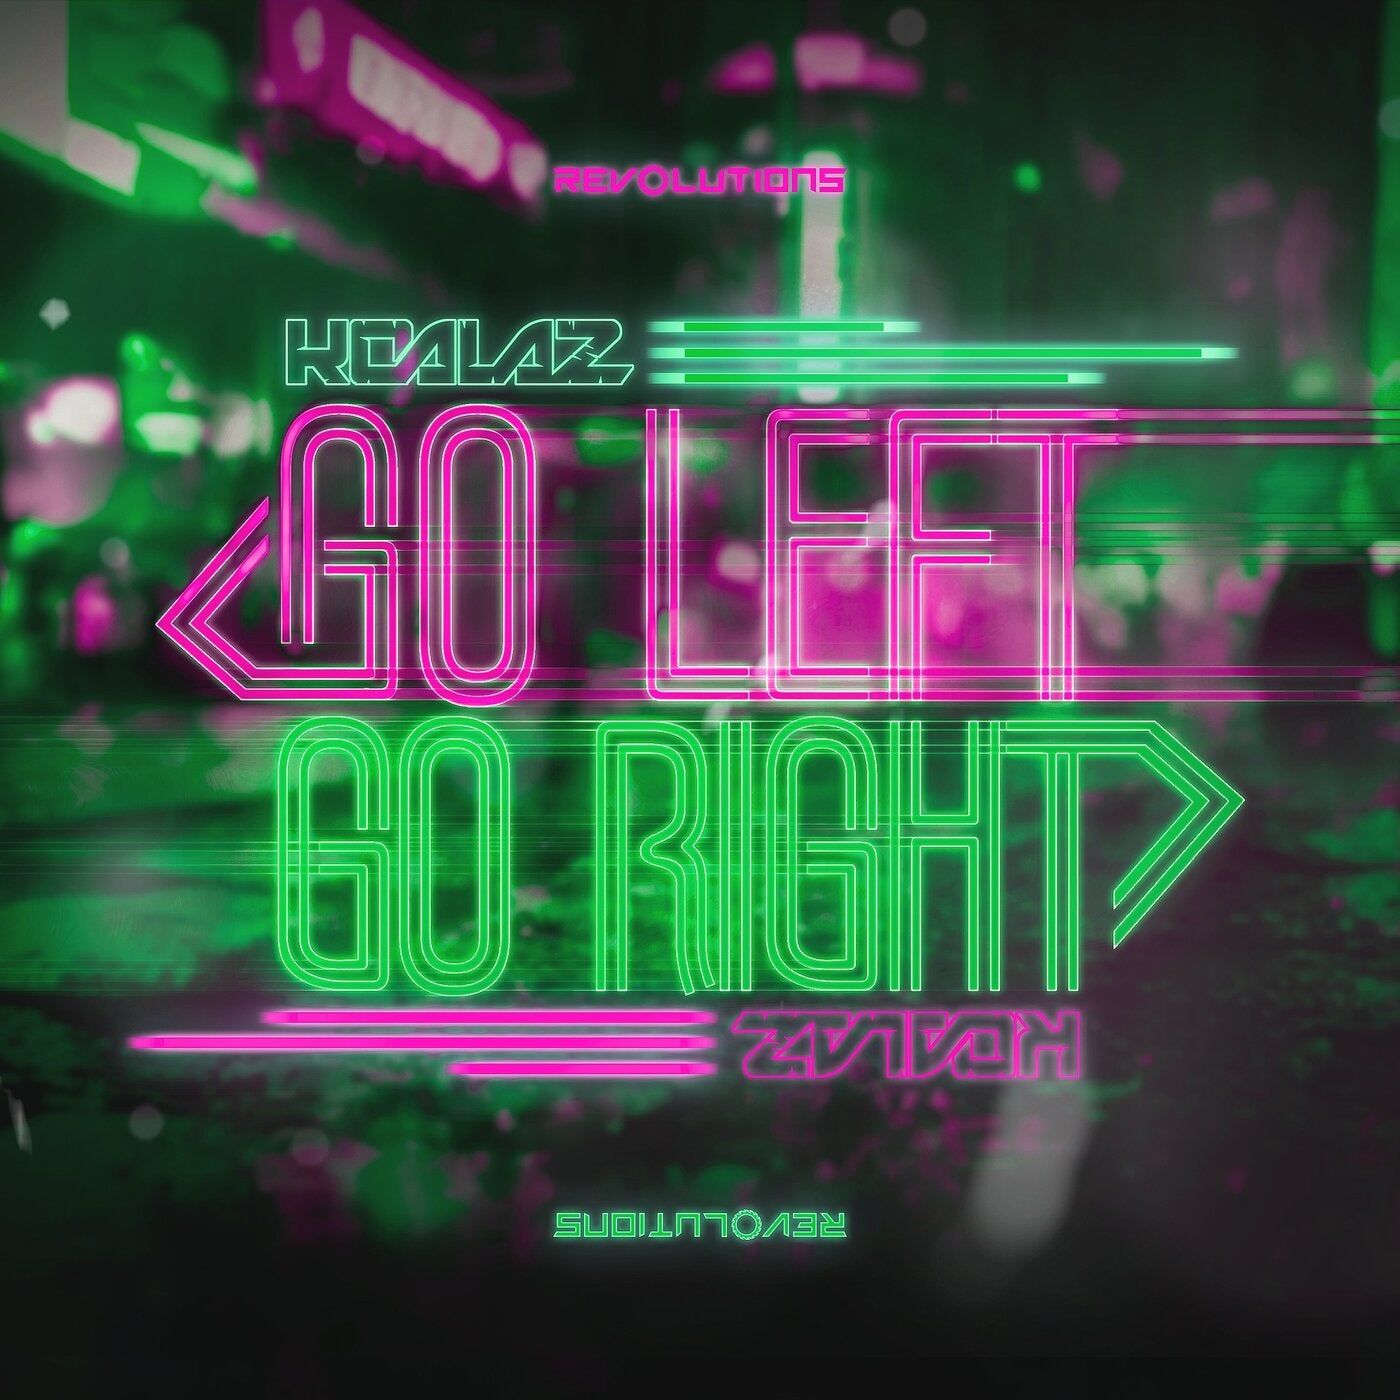 Go Left, Go Right